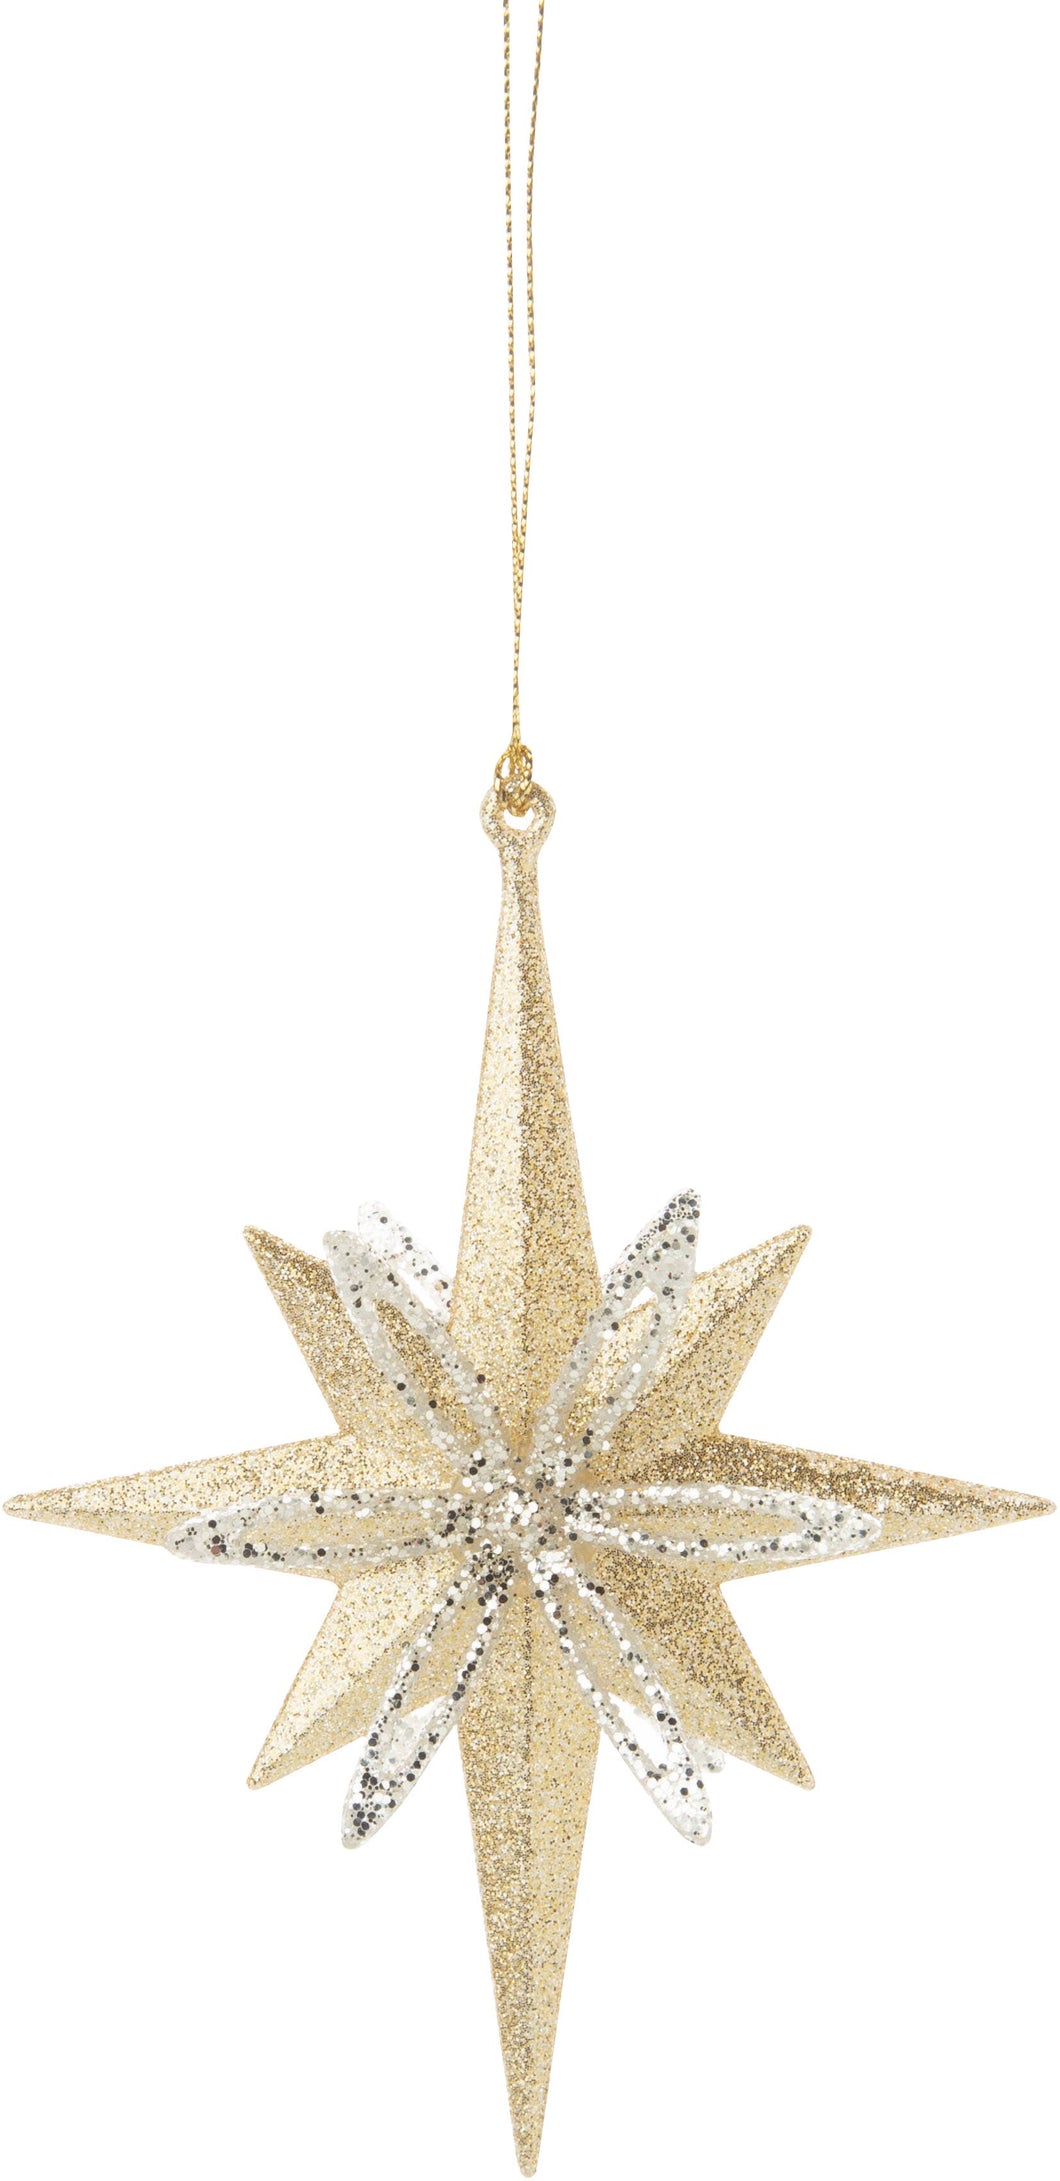 Acrylic Moravian star ornament, 2 layer, light gold and platinum glitter